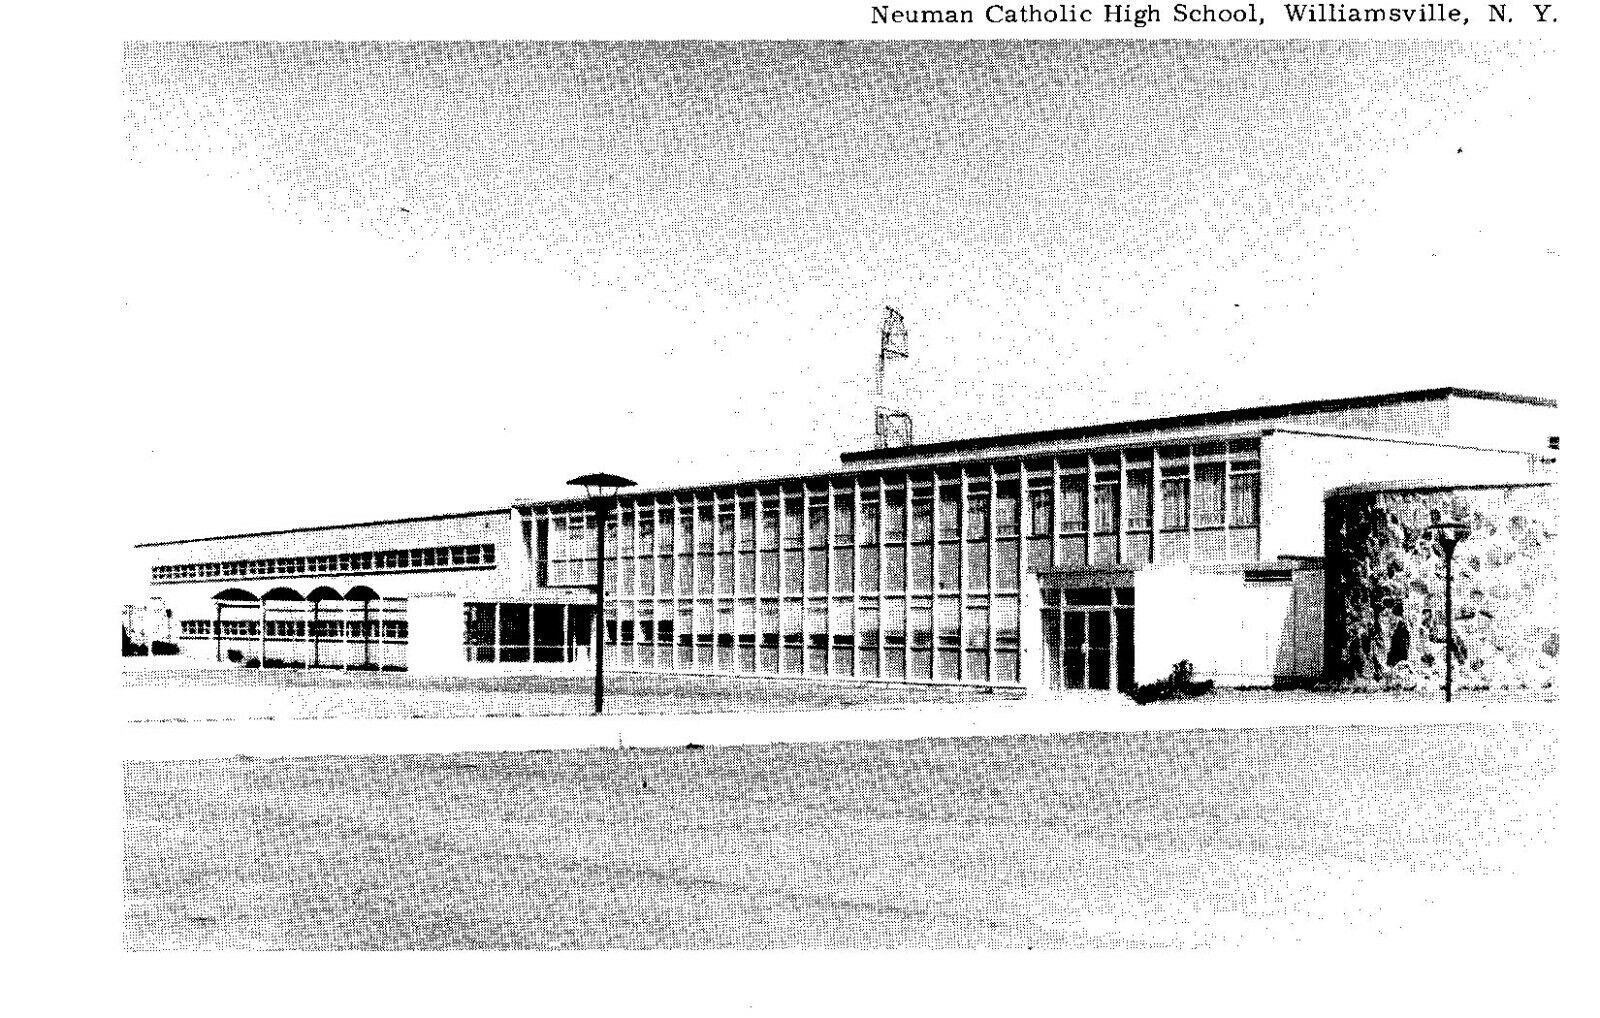 Neuman Catholic High School, Williamsville, NY Postcard